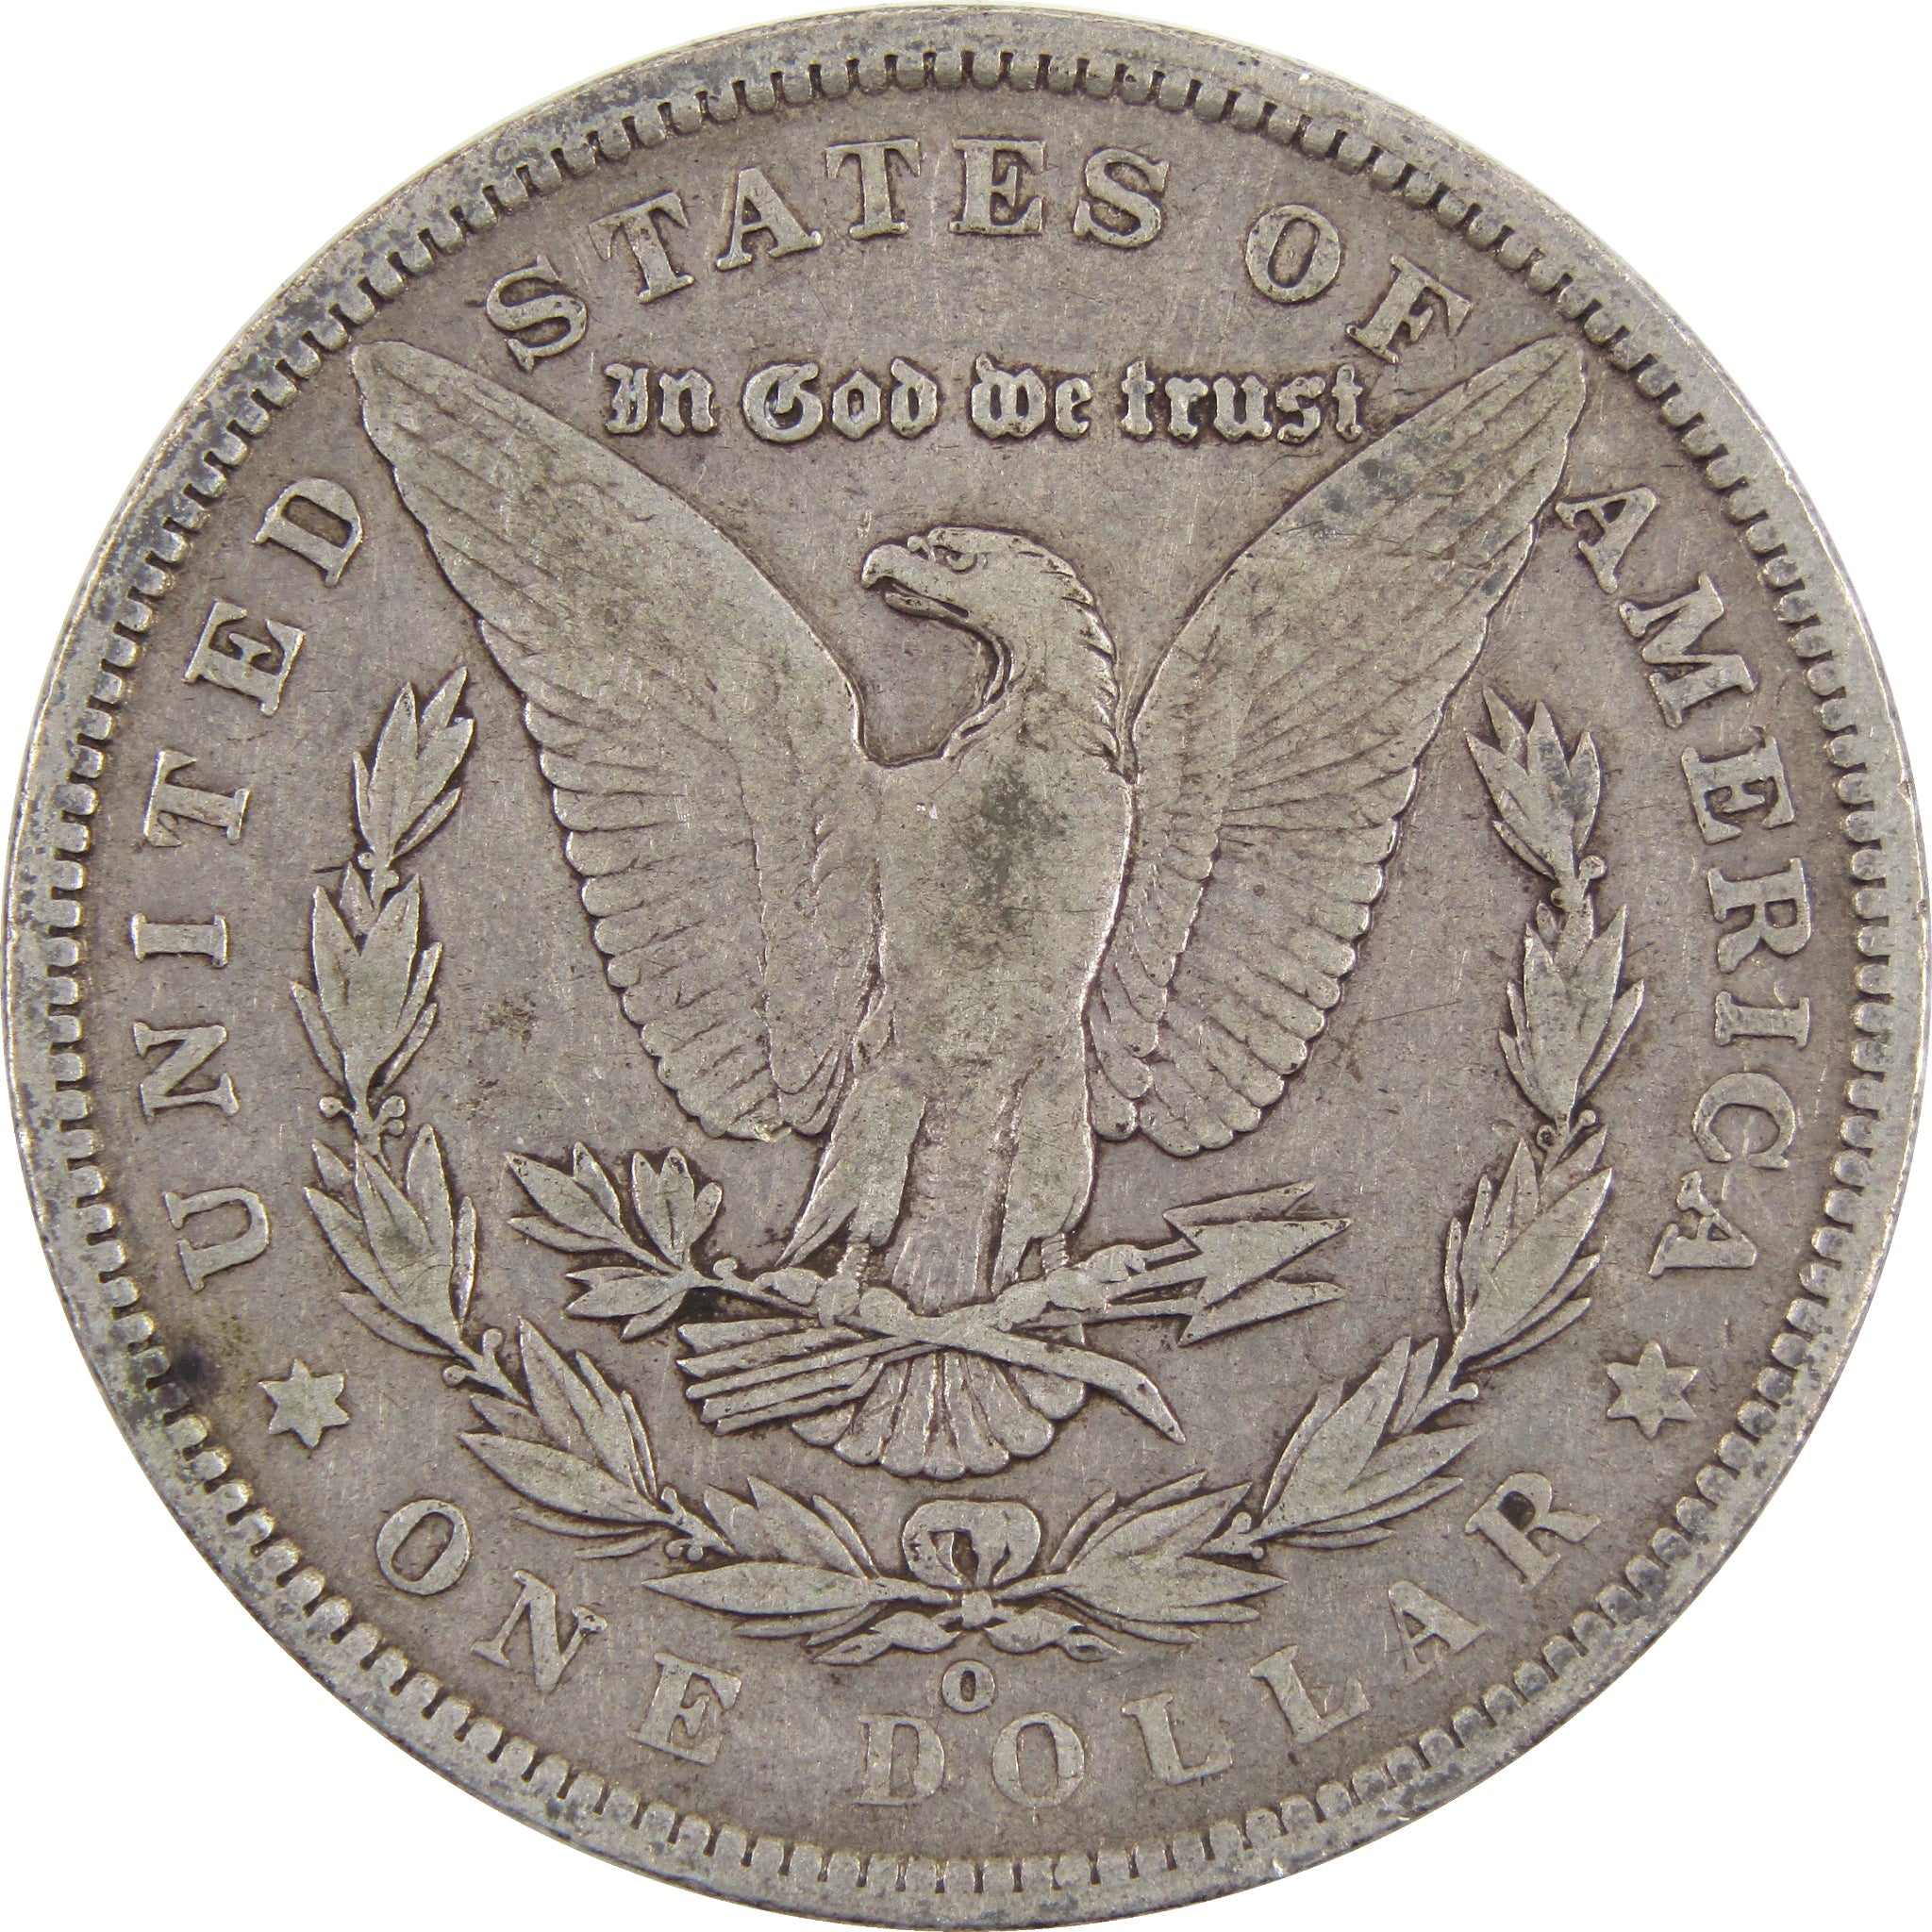 1900 O Morgan Dollar F Fine 90% Silver US Coin SKU:I2621 - Morgan coin - Morgan silver dollar - Morgan silver dollar for sale - Profile Coins &amp; Collectibles